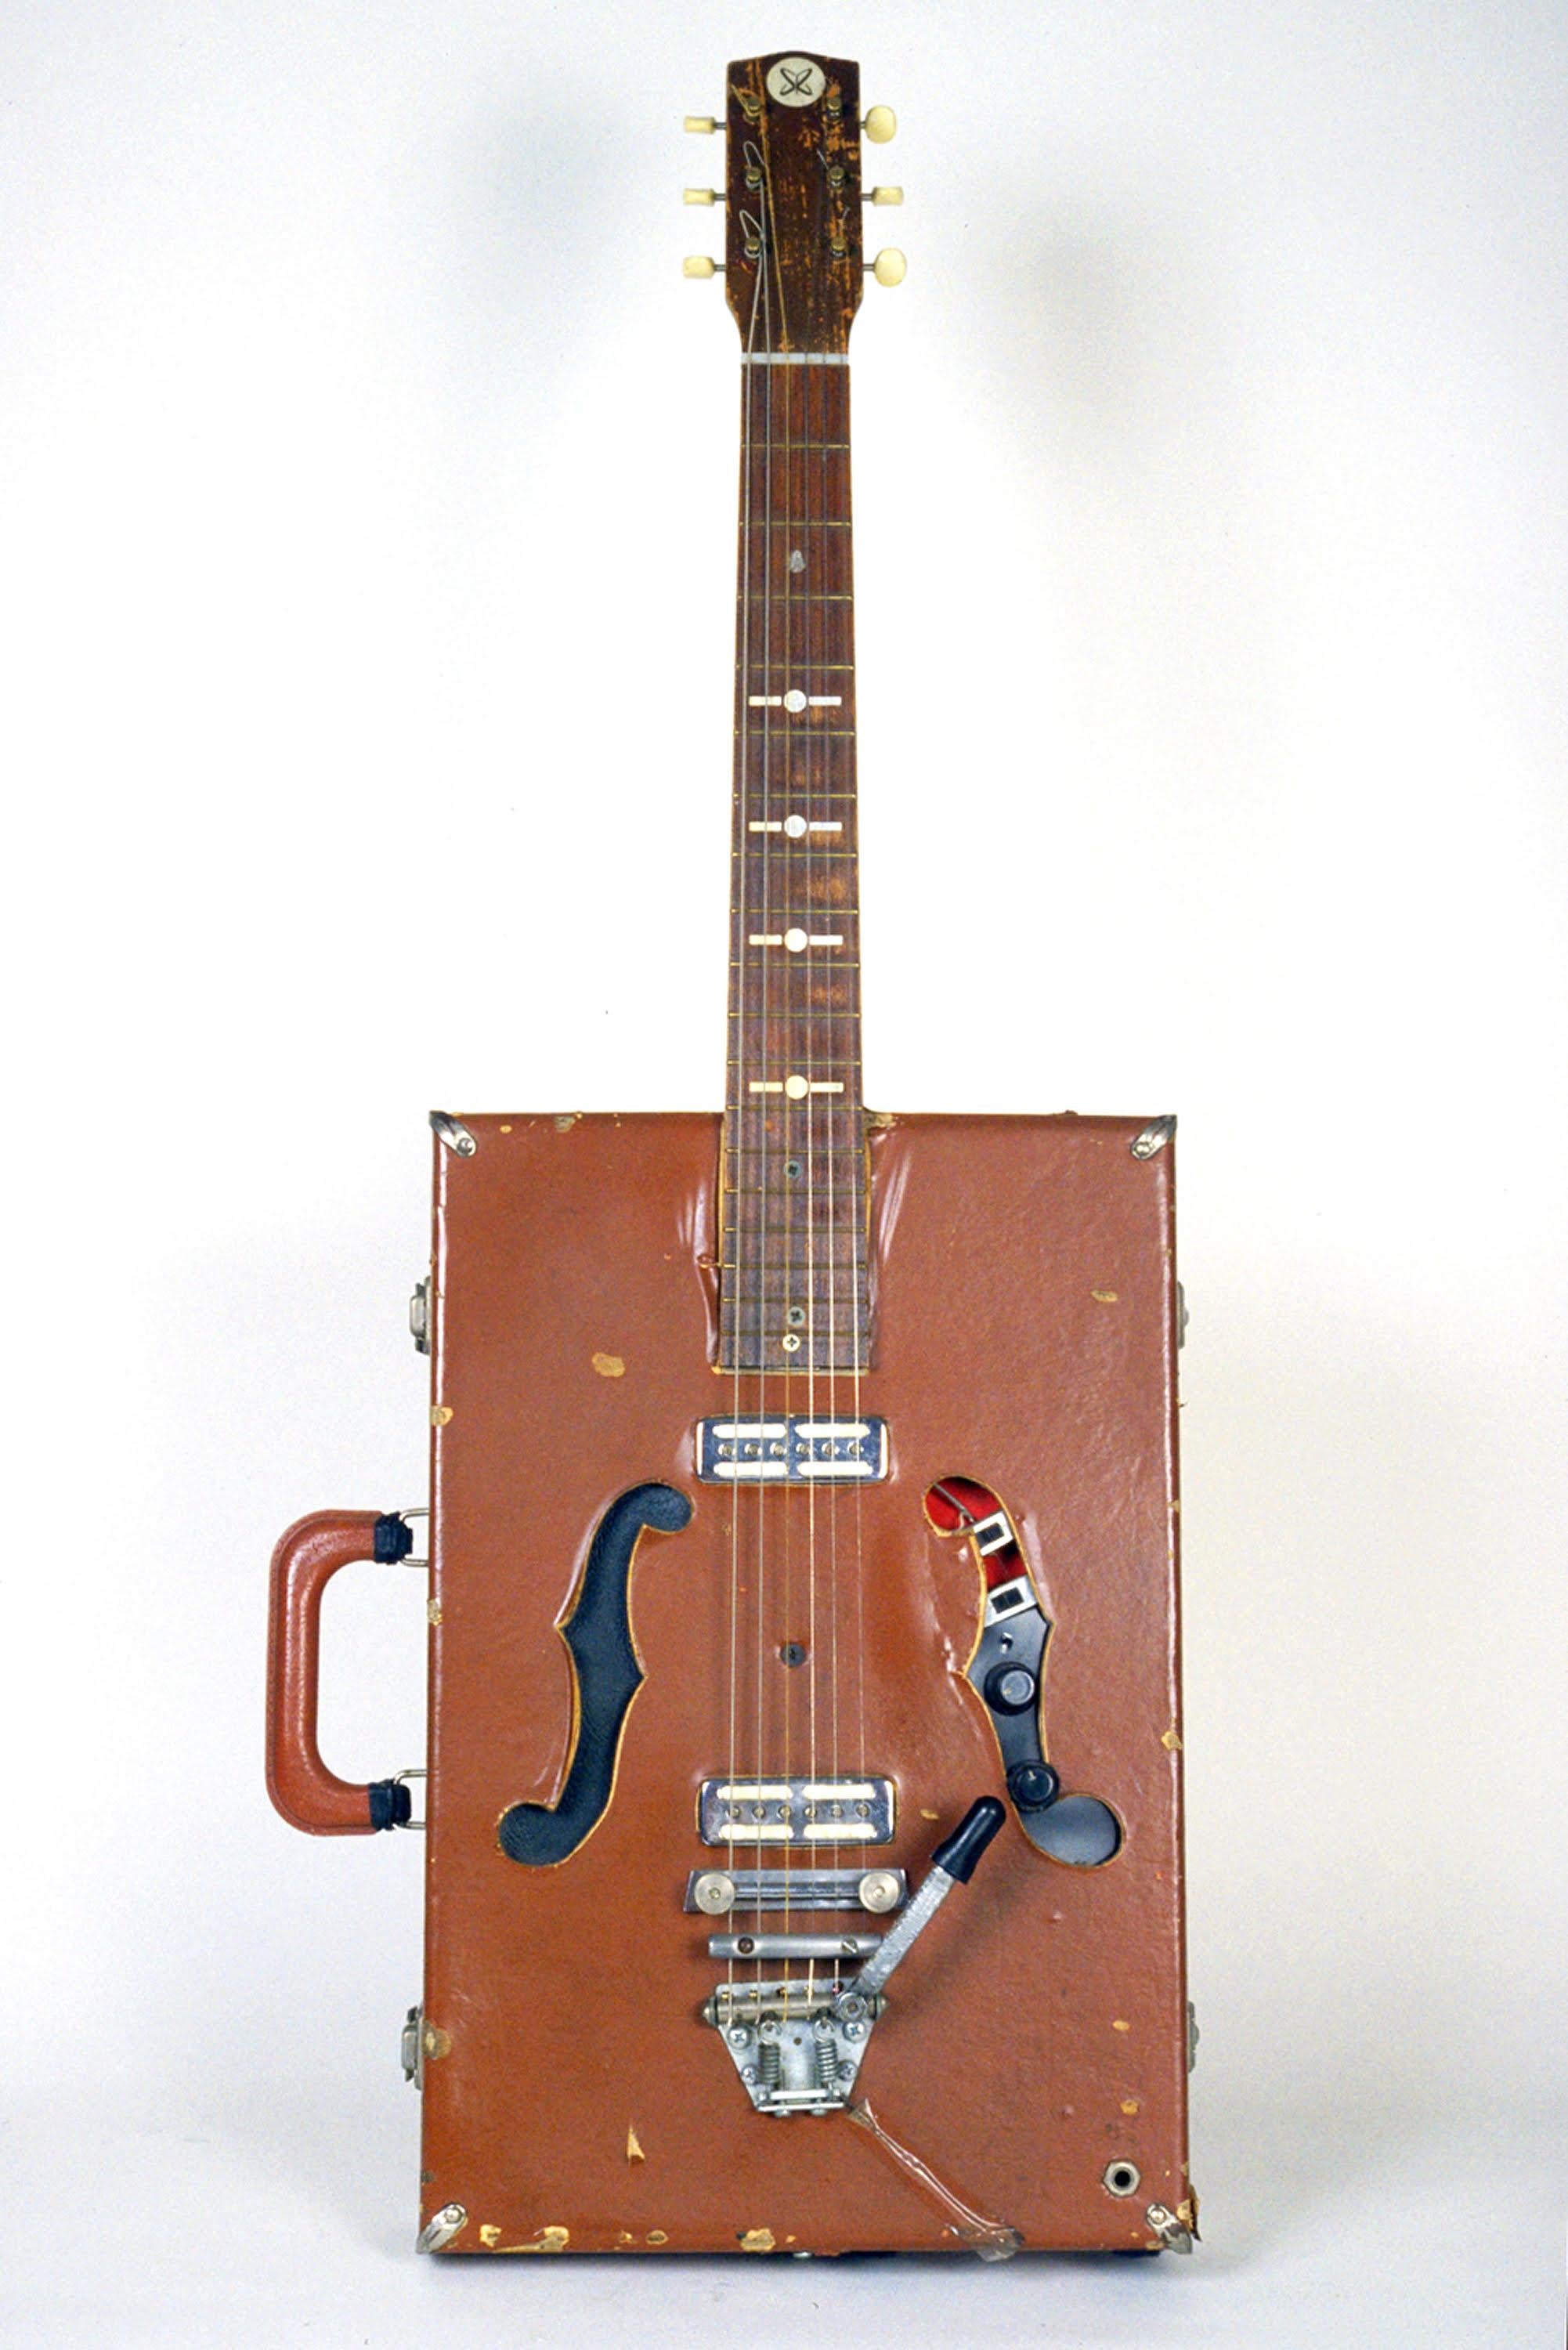 Ken Butler Figurative Sculpture – hybride Musikinstrument-Skulptur "Briefcase Guitar" (Gitarre), Assemblage